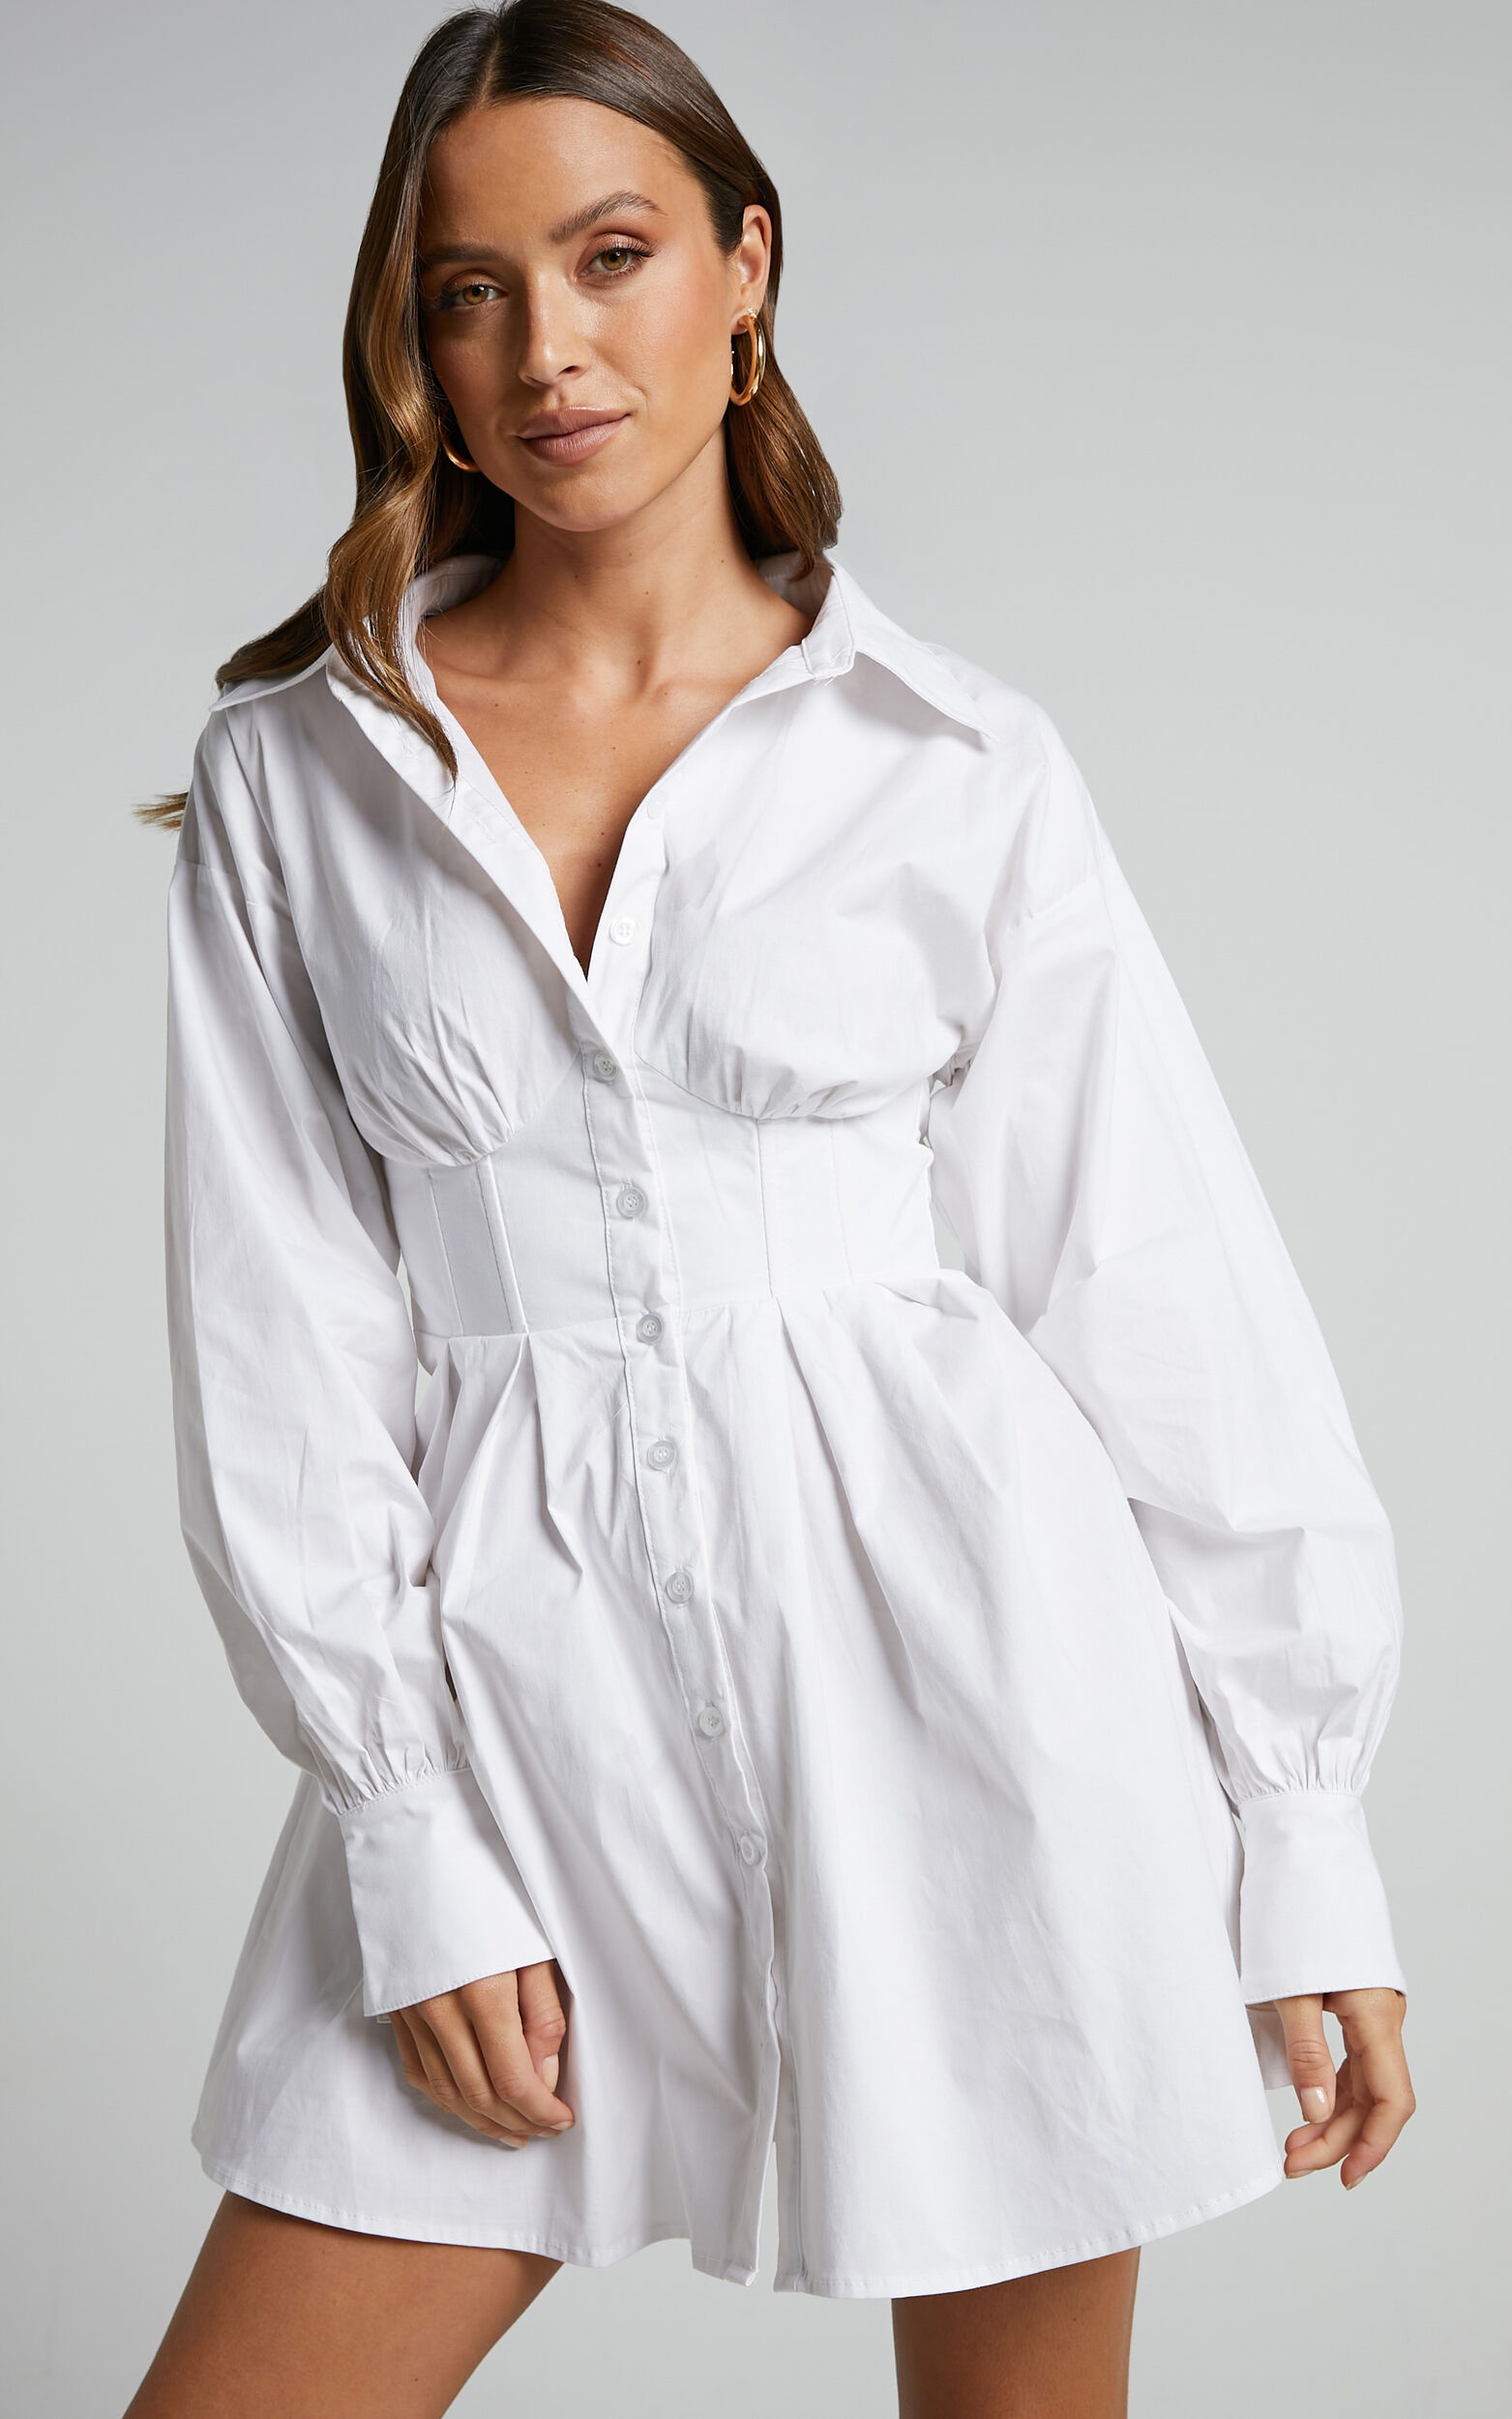 Claudette Mini Dress - Long Sleeve Corset Shirt Dress in White - 06, WHT2